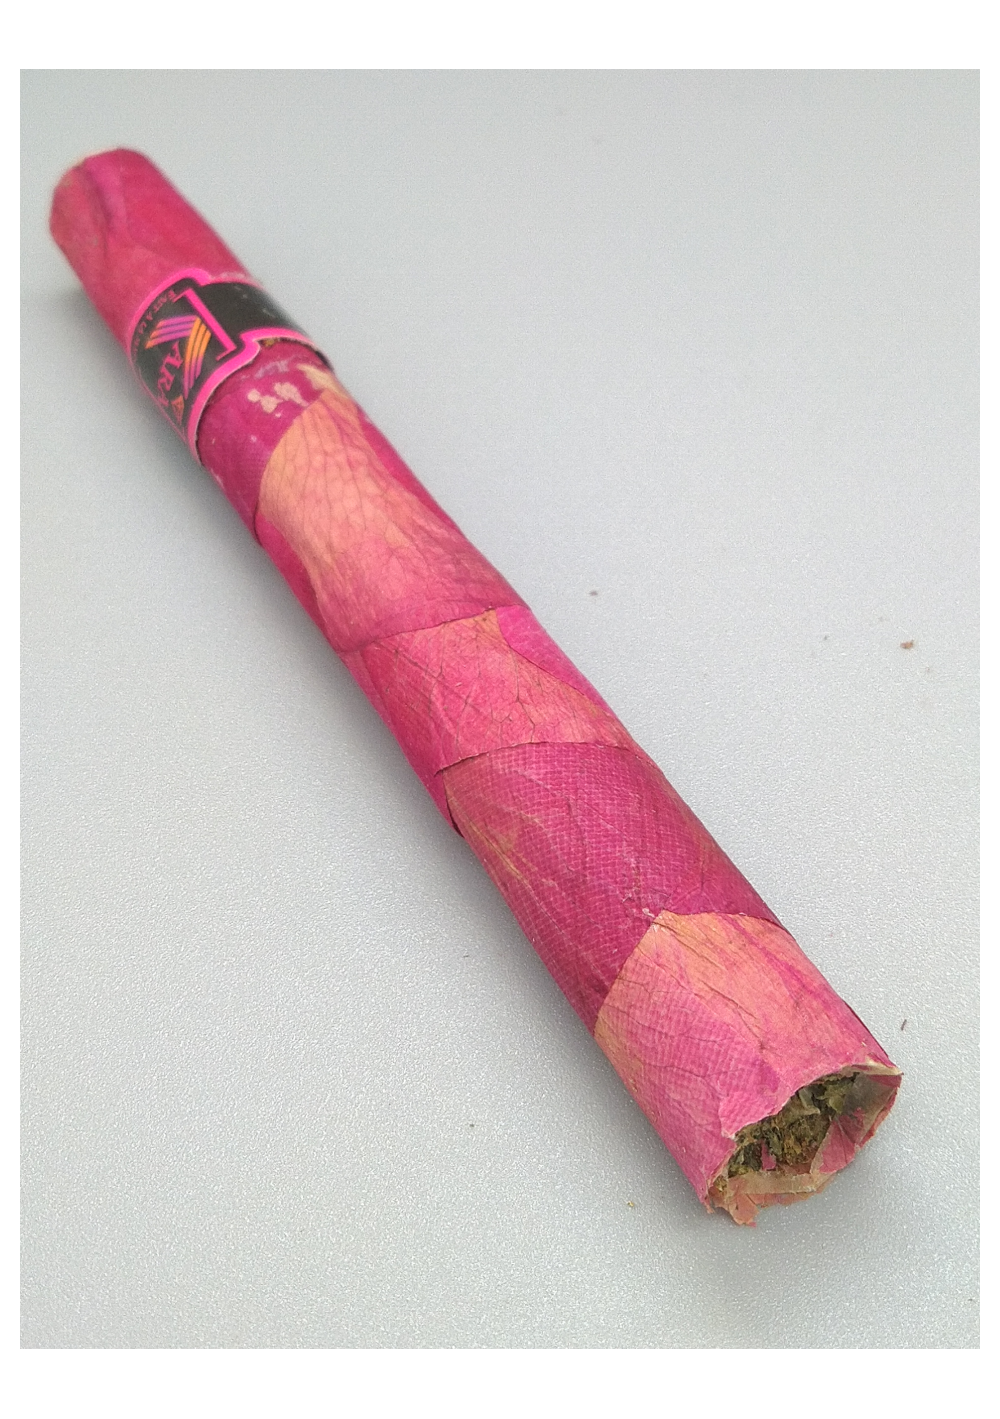 Cigarillo Rose Petals Blunt 2gr - Cannabis Cigar rolled up with Rose Petals Blunt - Cannabis Light